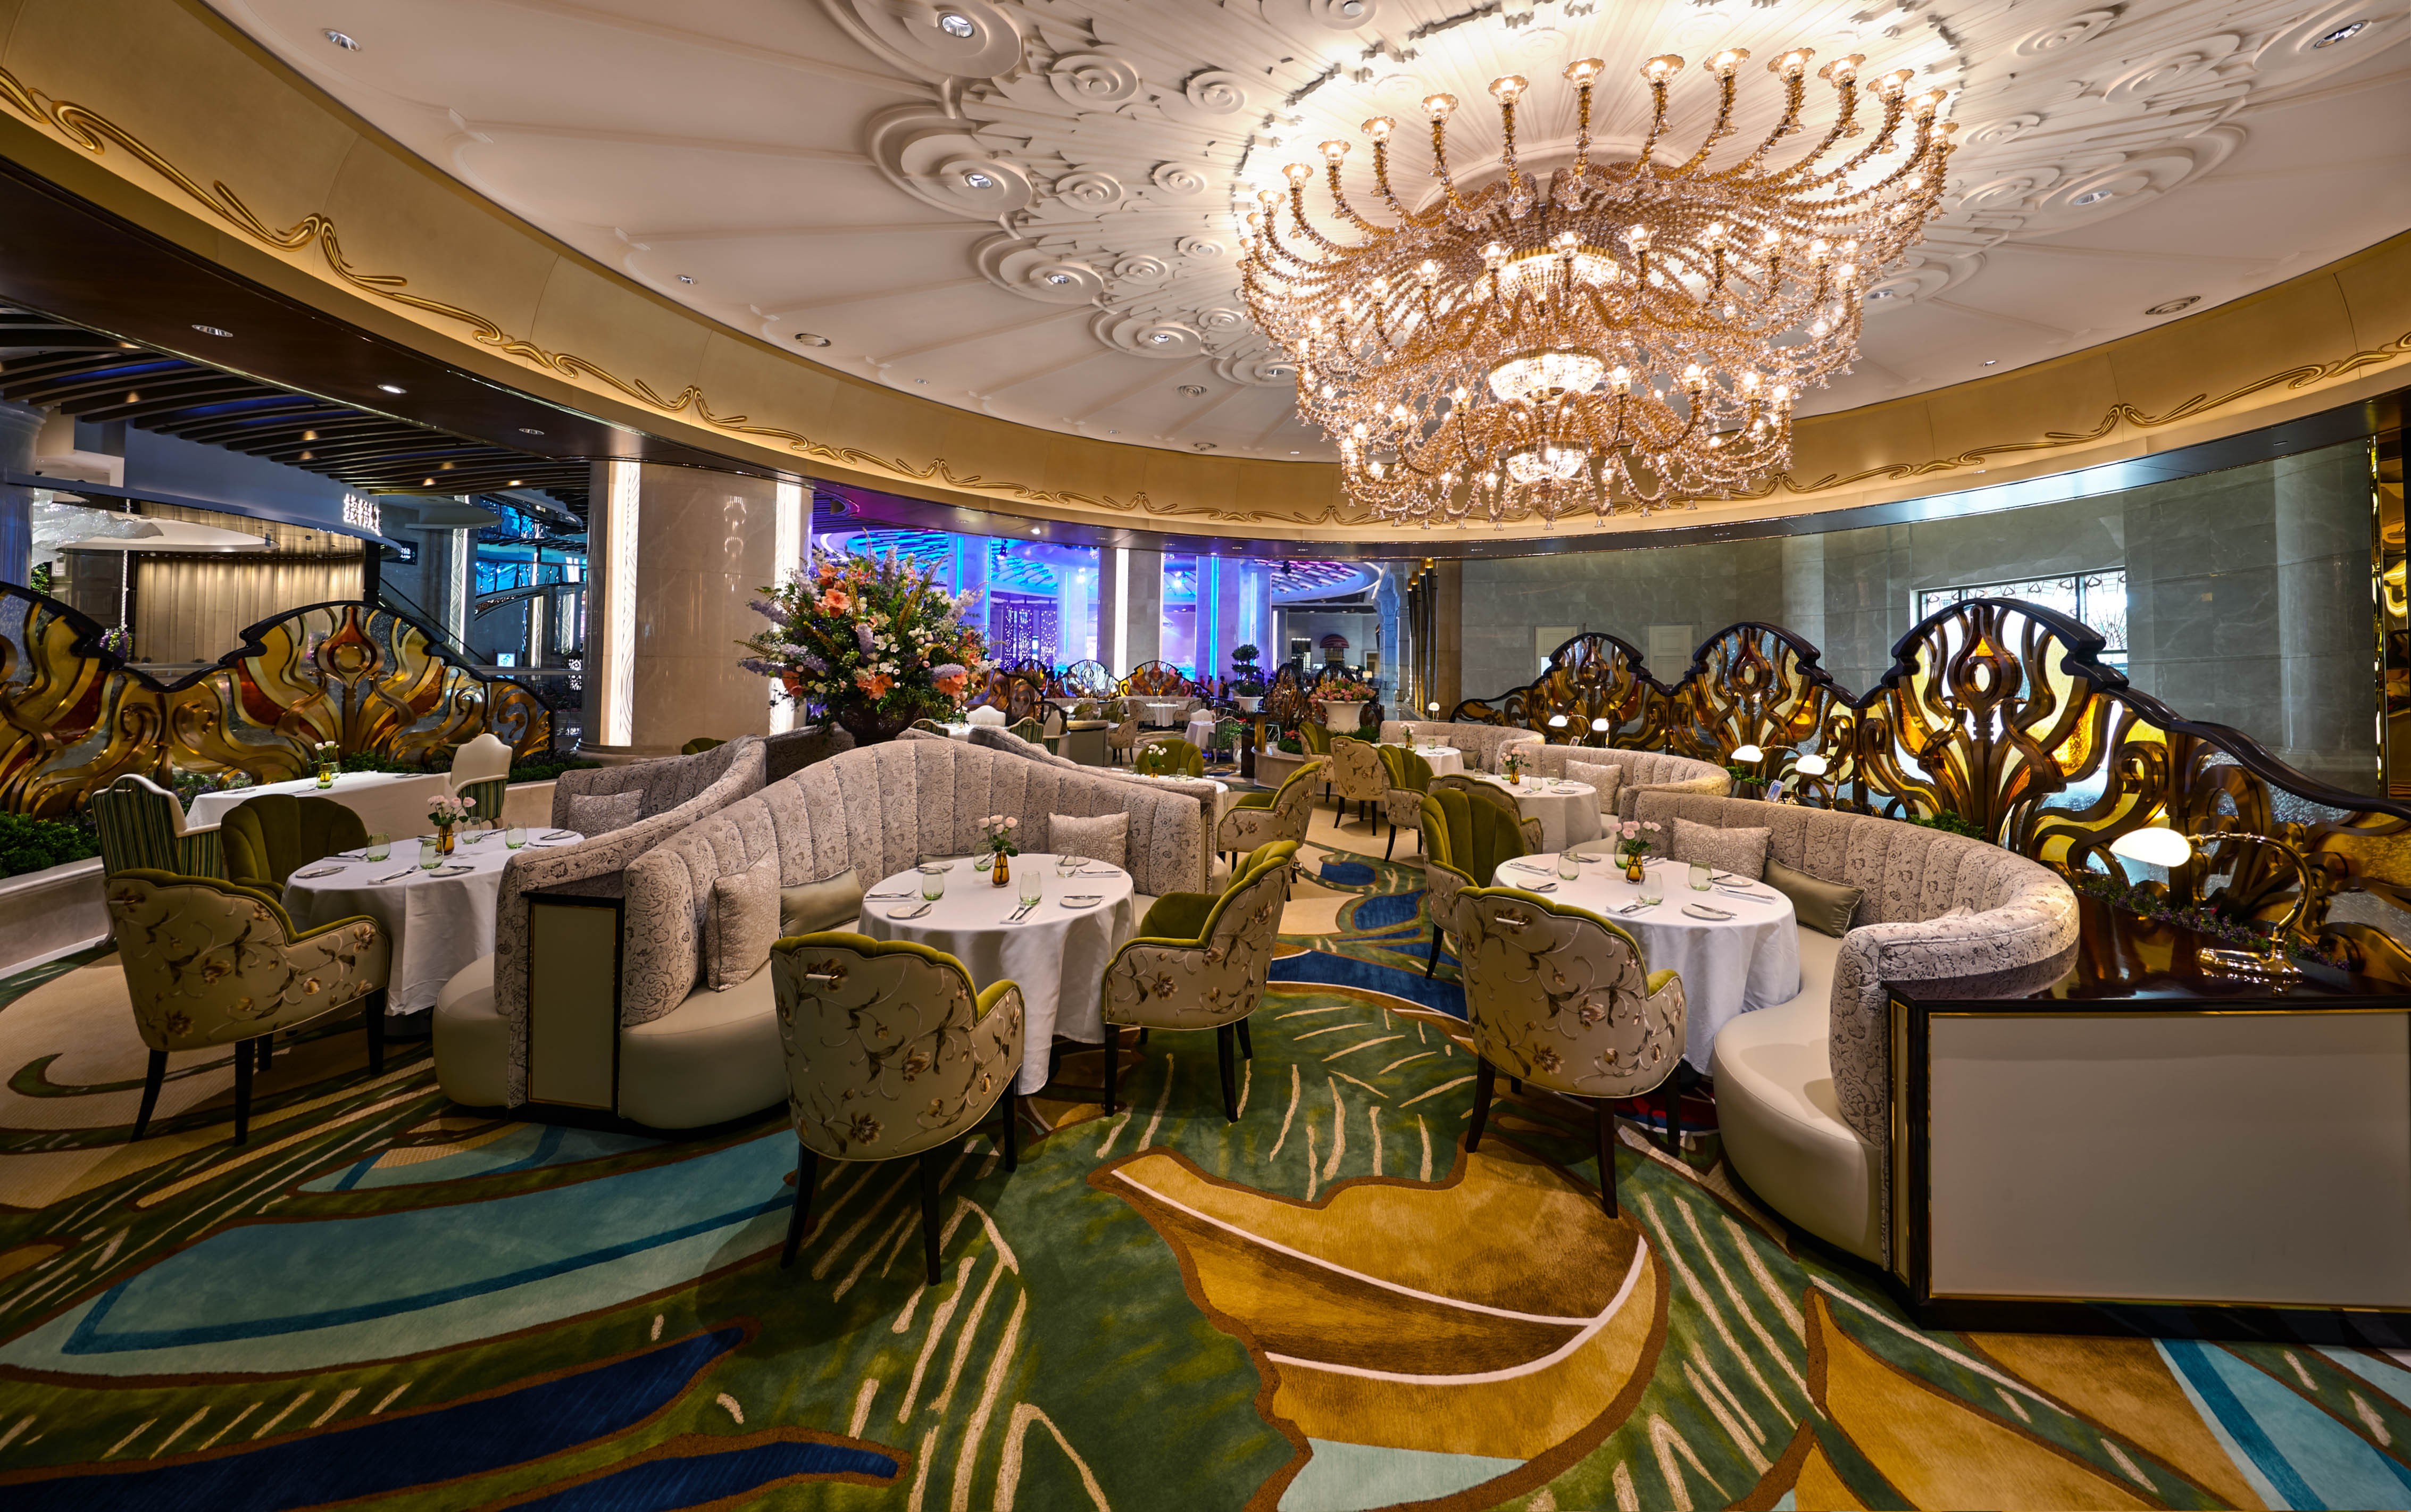 Café de Paris Monte-Carlo serves plush French cuisine in the Galaxy Macau.